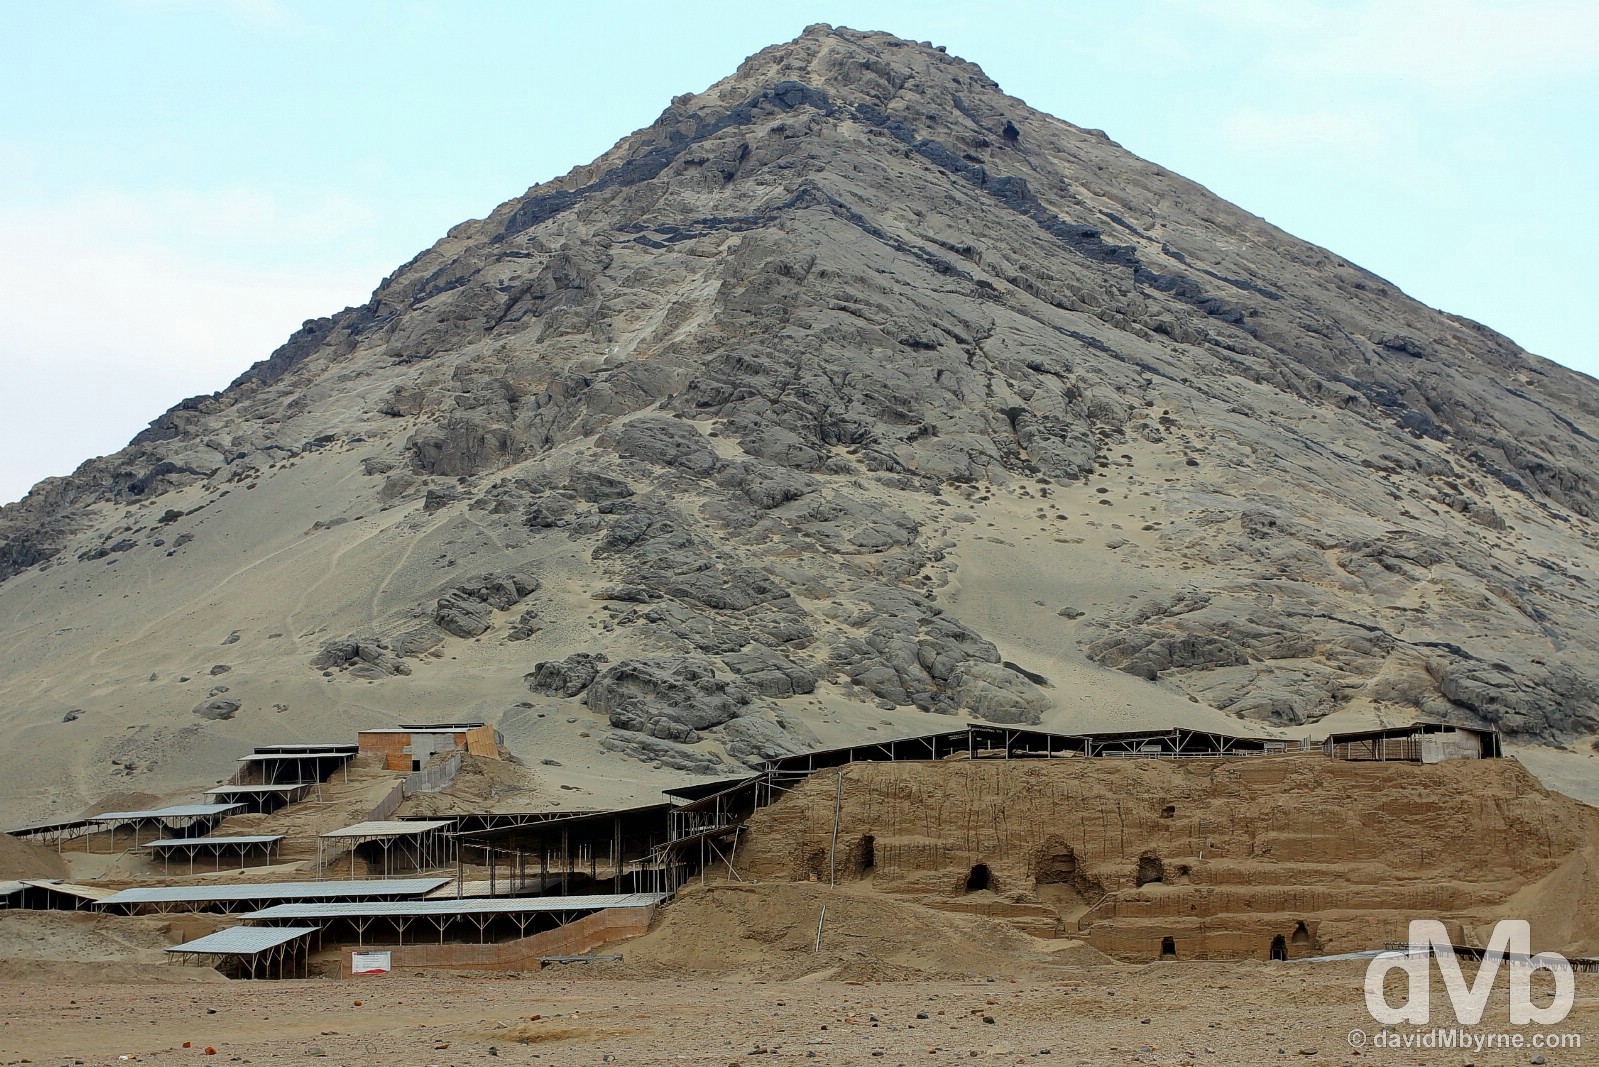 Huaca de la Luna (Temple of the Moon) at the base of Cerro Blanca, Moche, northwestern Peru. August 1, 2015.